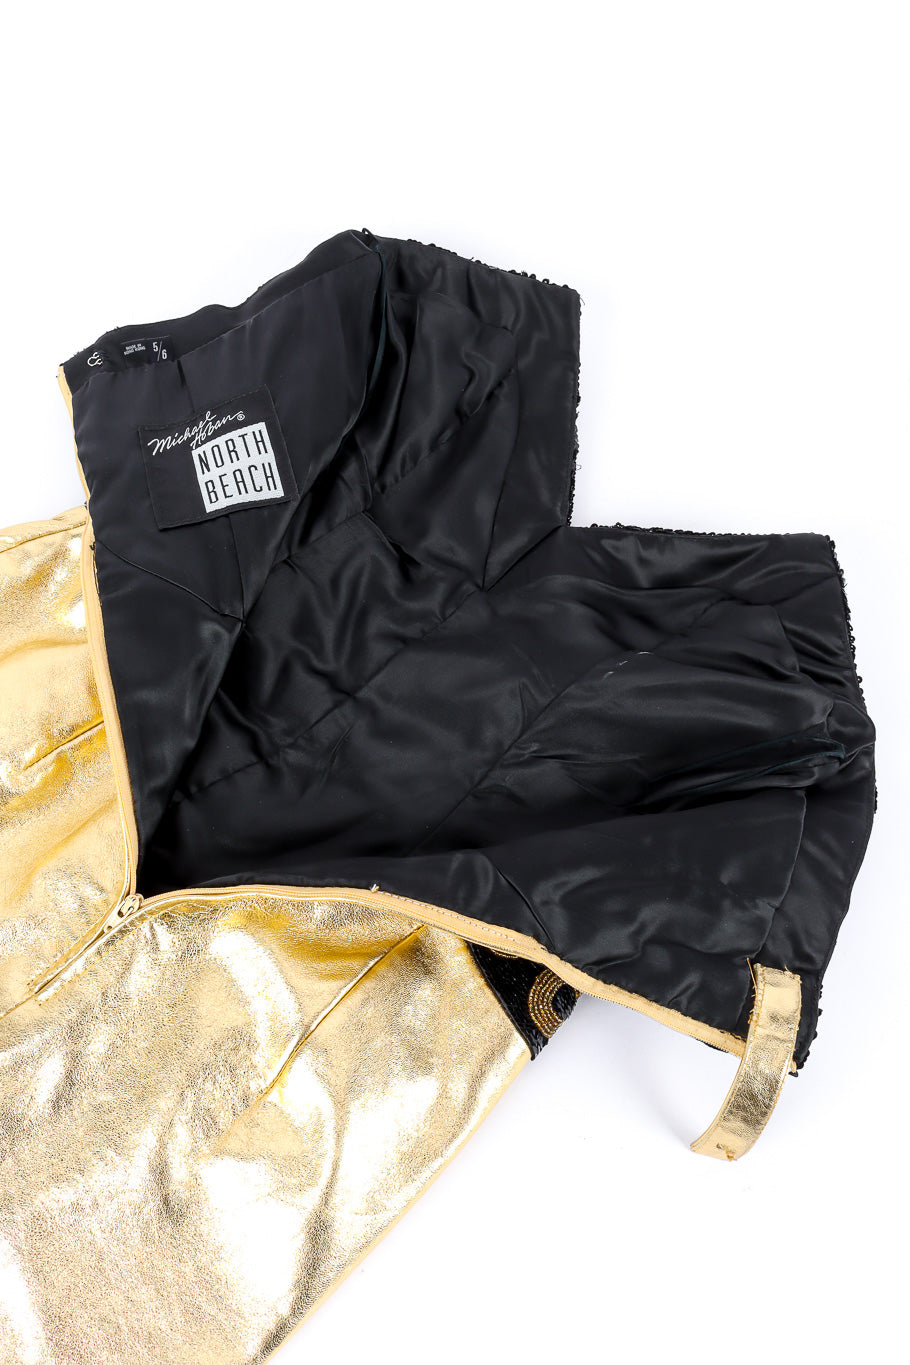 Zodiac Sequin Leather Dress & Jacket Set flat lay dress unzipped @recessla